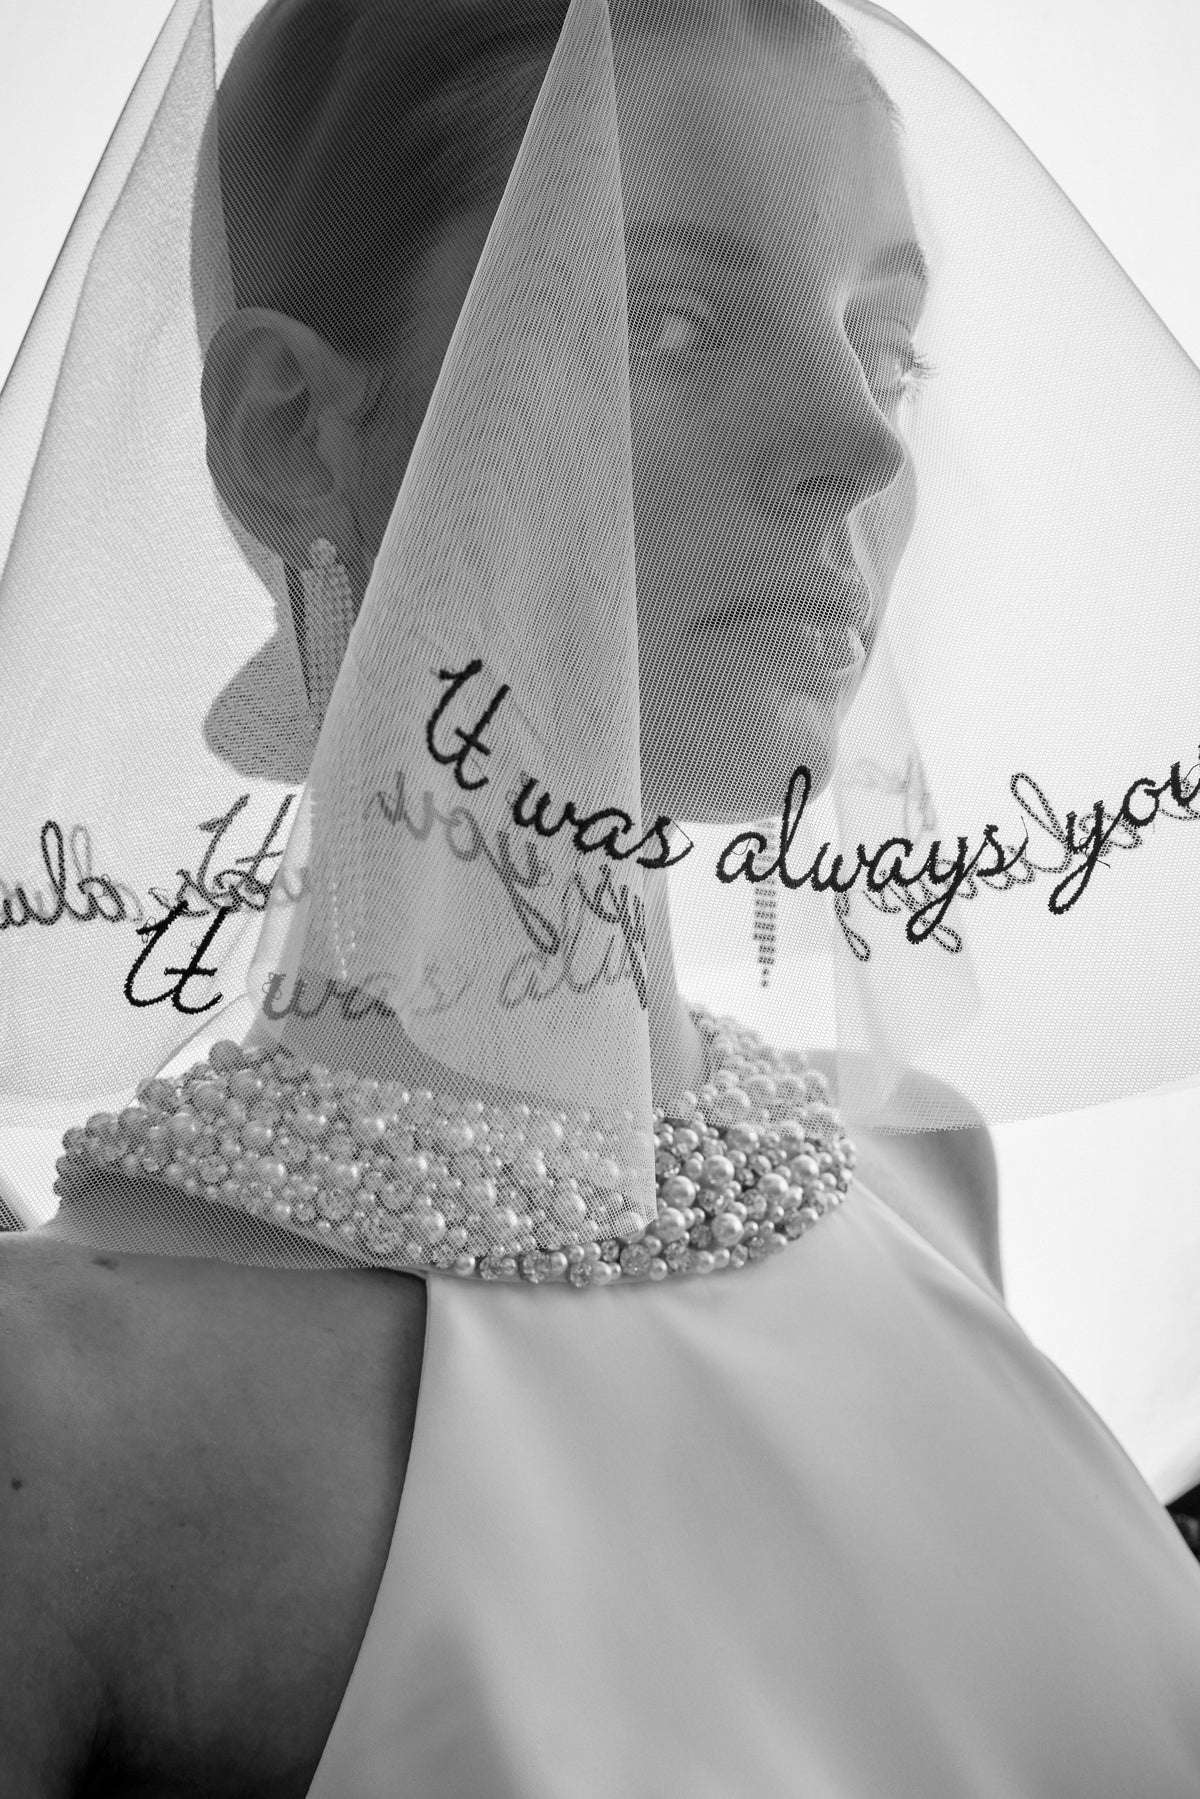 Embroidered wedding/bridal veil - Always you